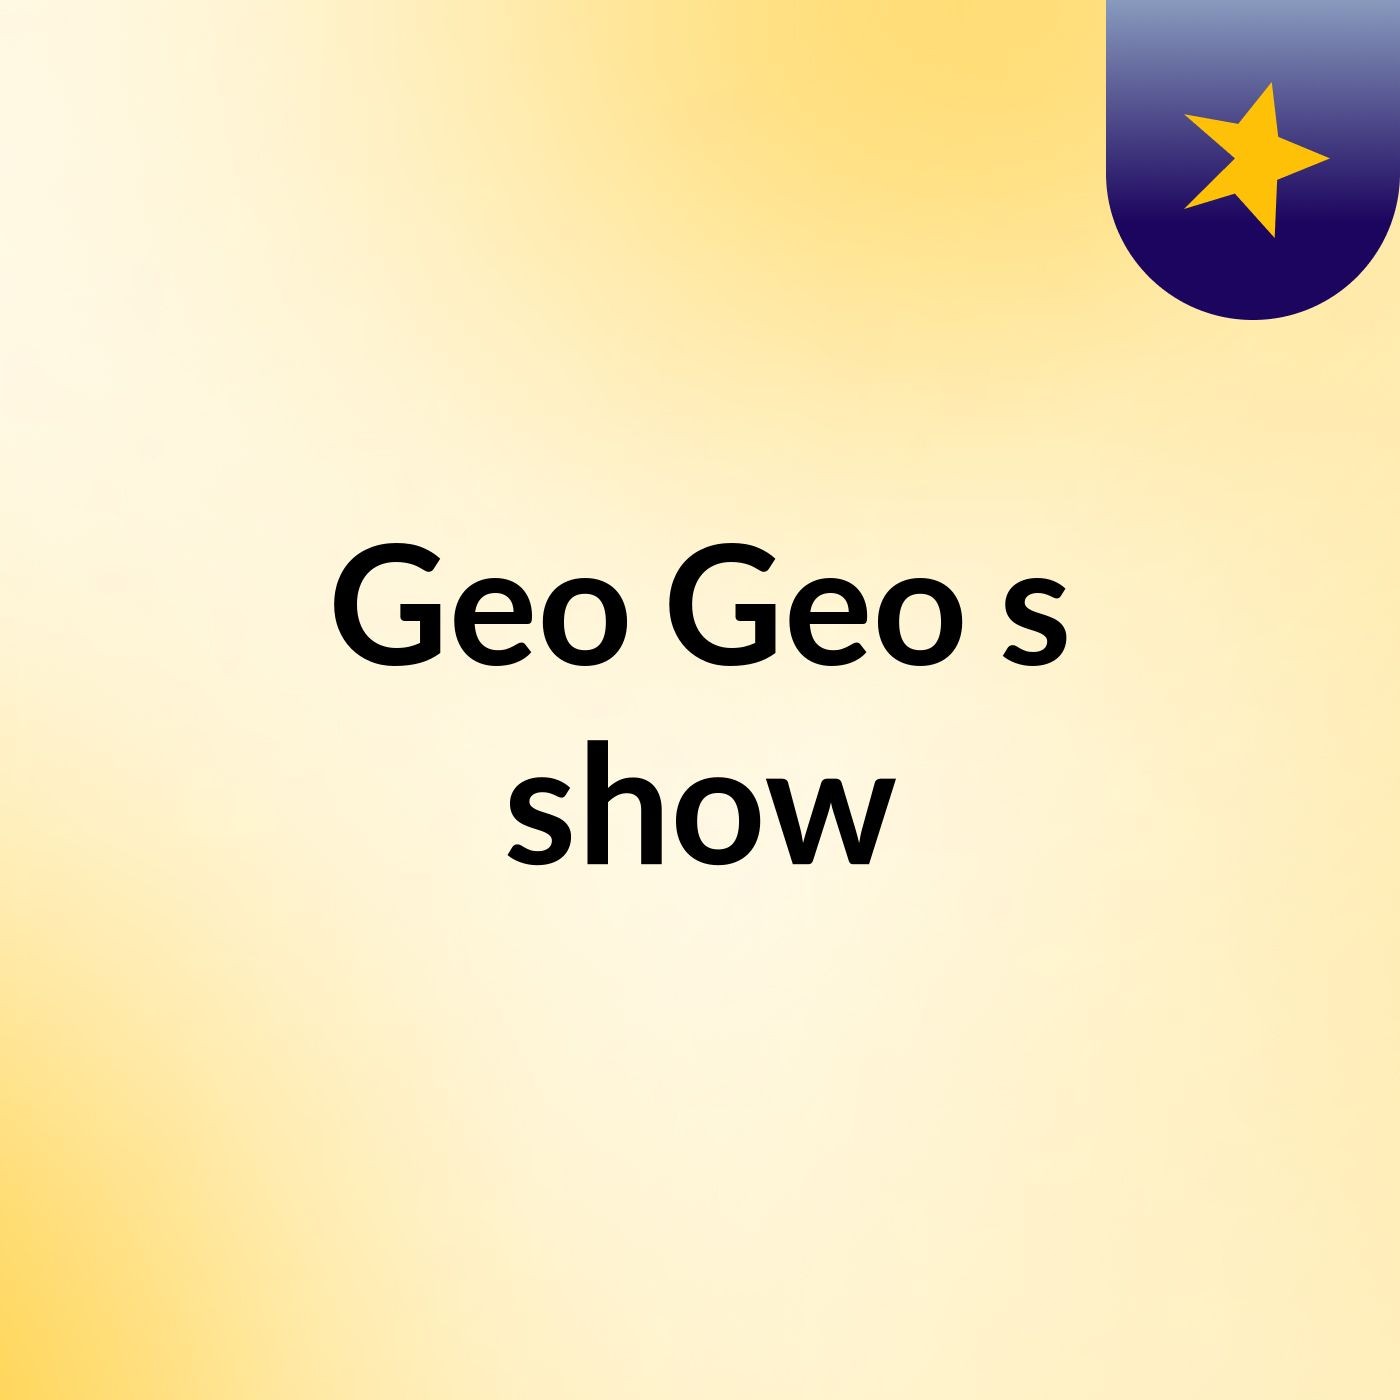 Geo Geo's show